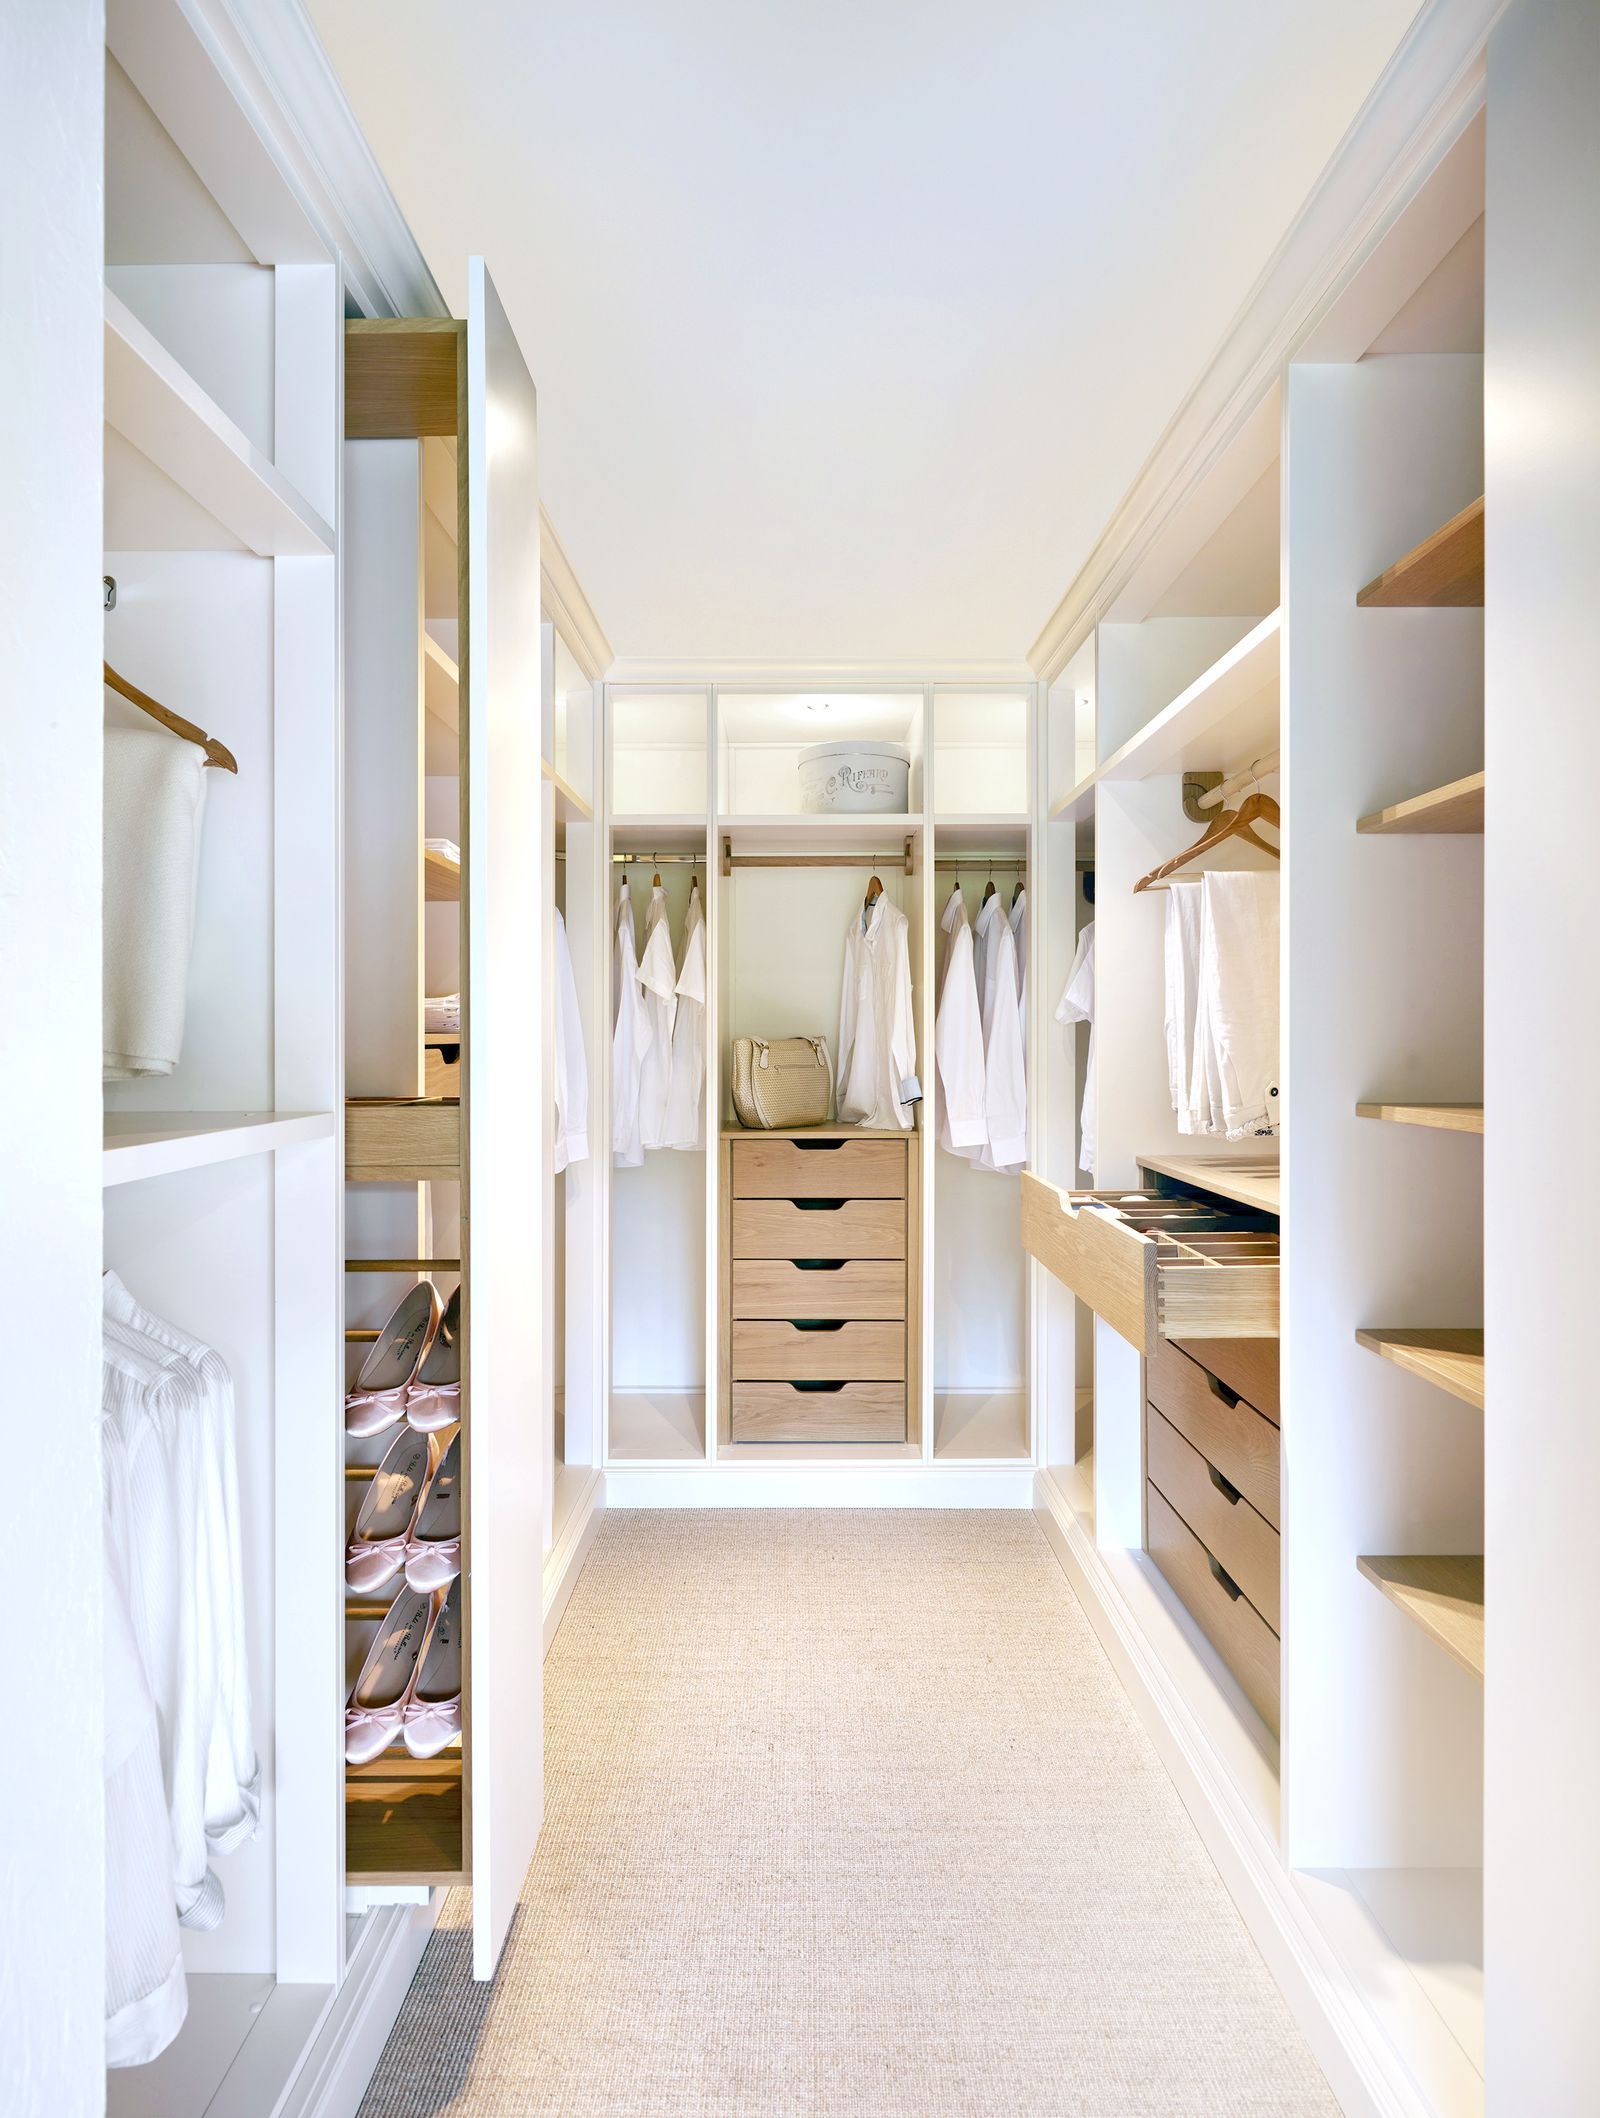 10 clever walk-in wardrobe ideas to help you create your dream closet -   15 room decor Shelves closet ideas